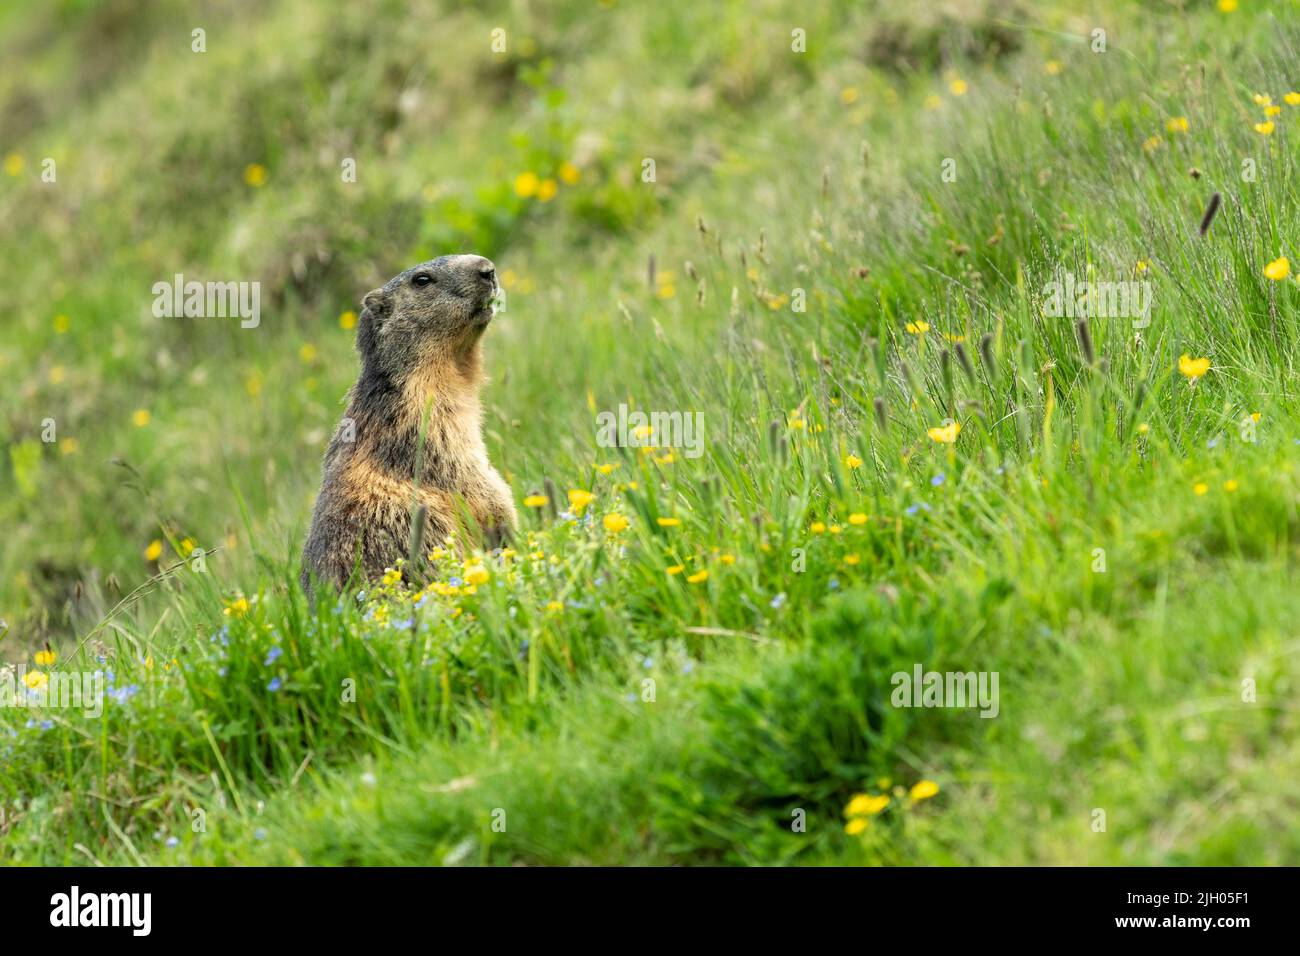 Alpine marmot (Marmota marmota) feeding on a lush grass field in the mountains. Brigels, Surselva, Graubünden, Switzerland. Stock Photo